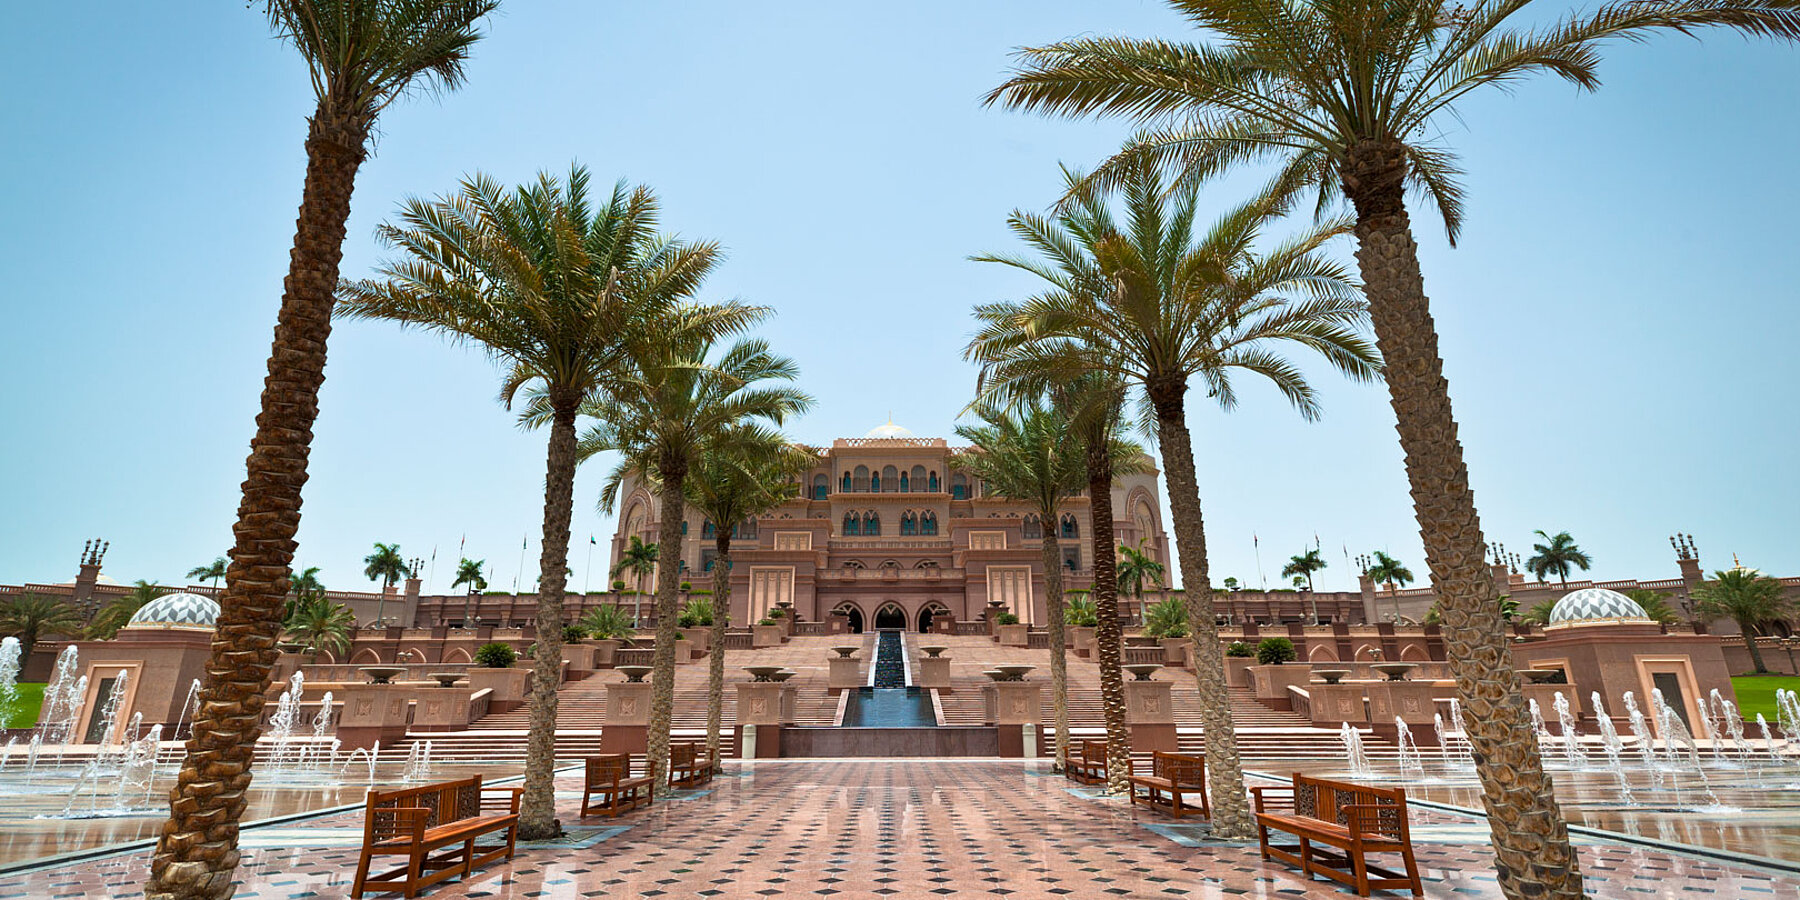 Emirates Palace, Abu Dhabi, United Arab Emirates - MESSERSCHMITT Systems